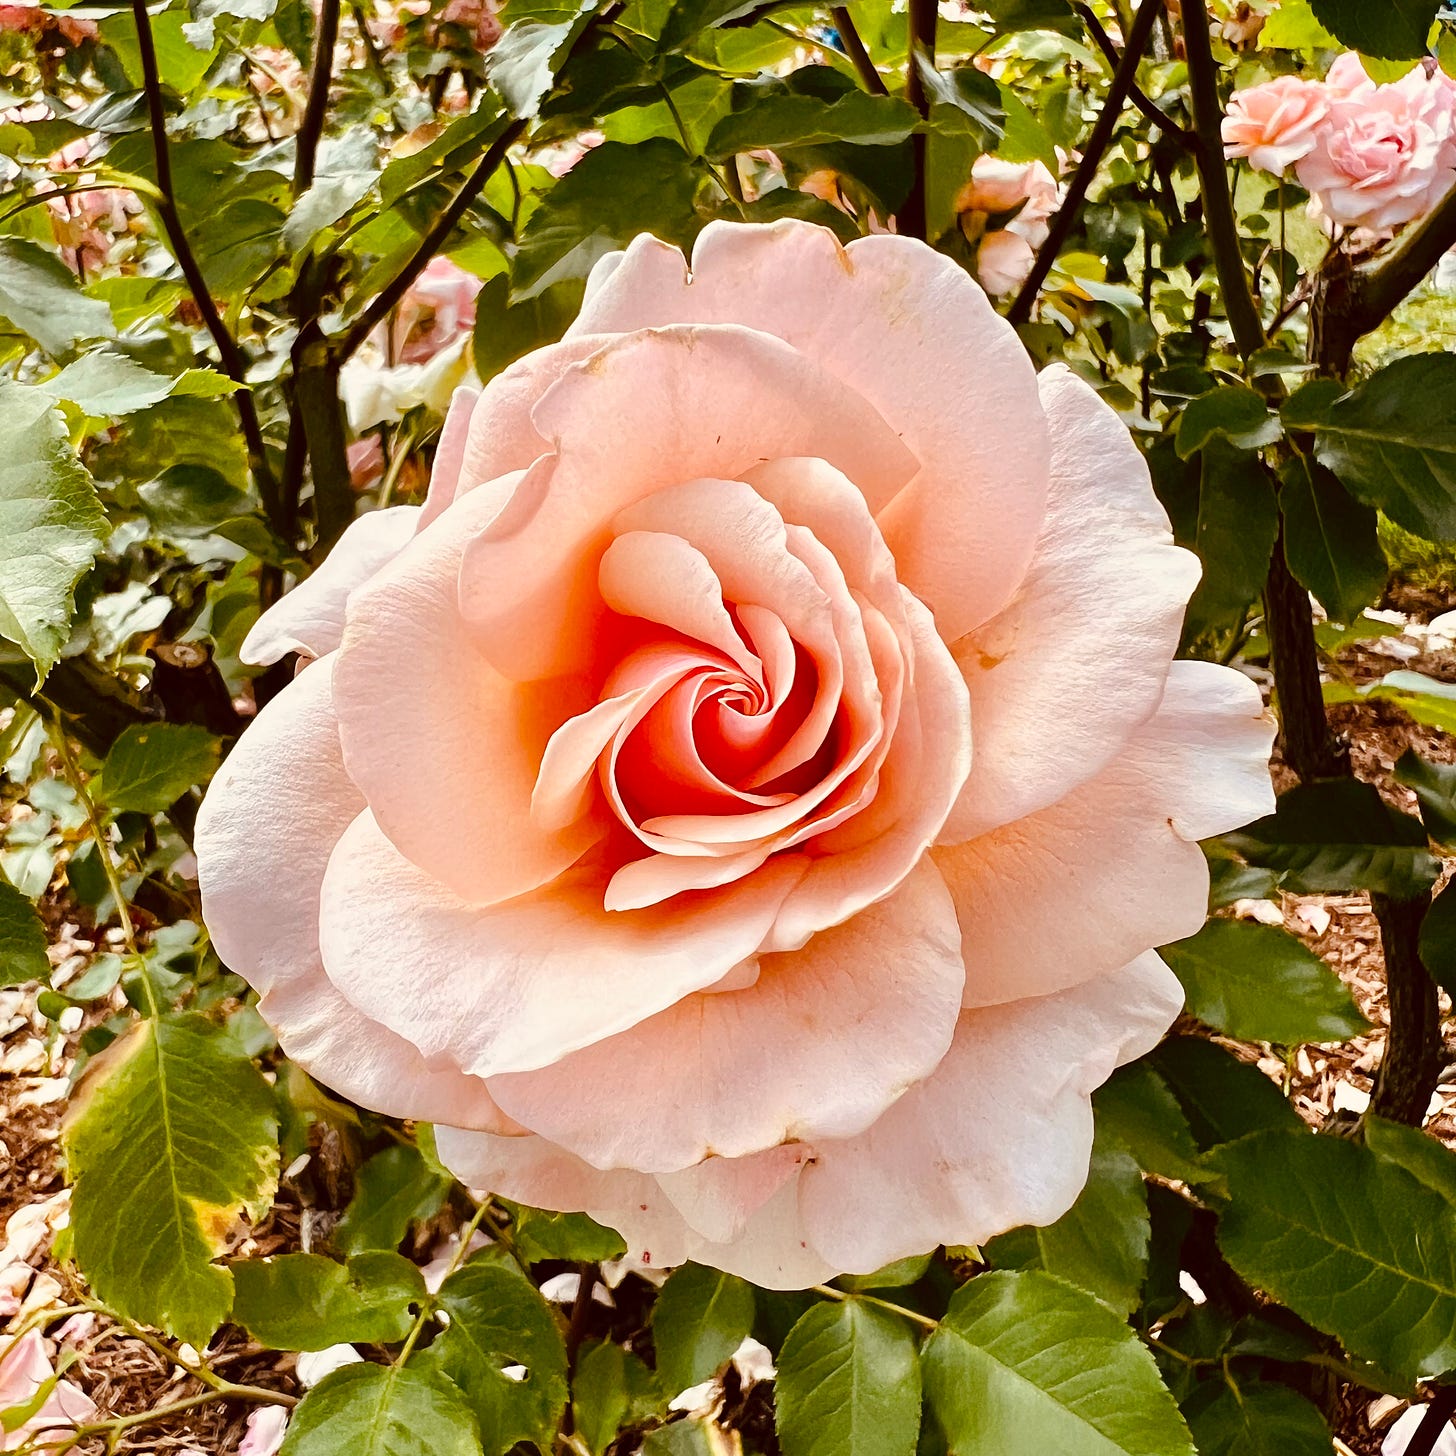 A beautiful pink rose